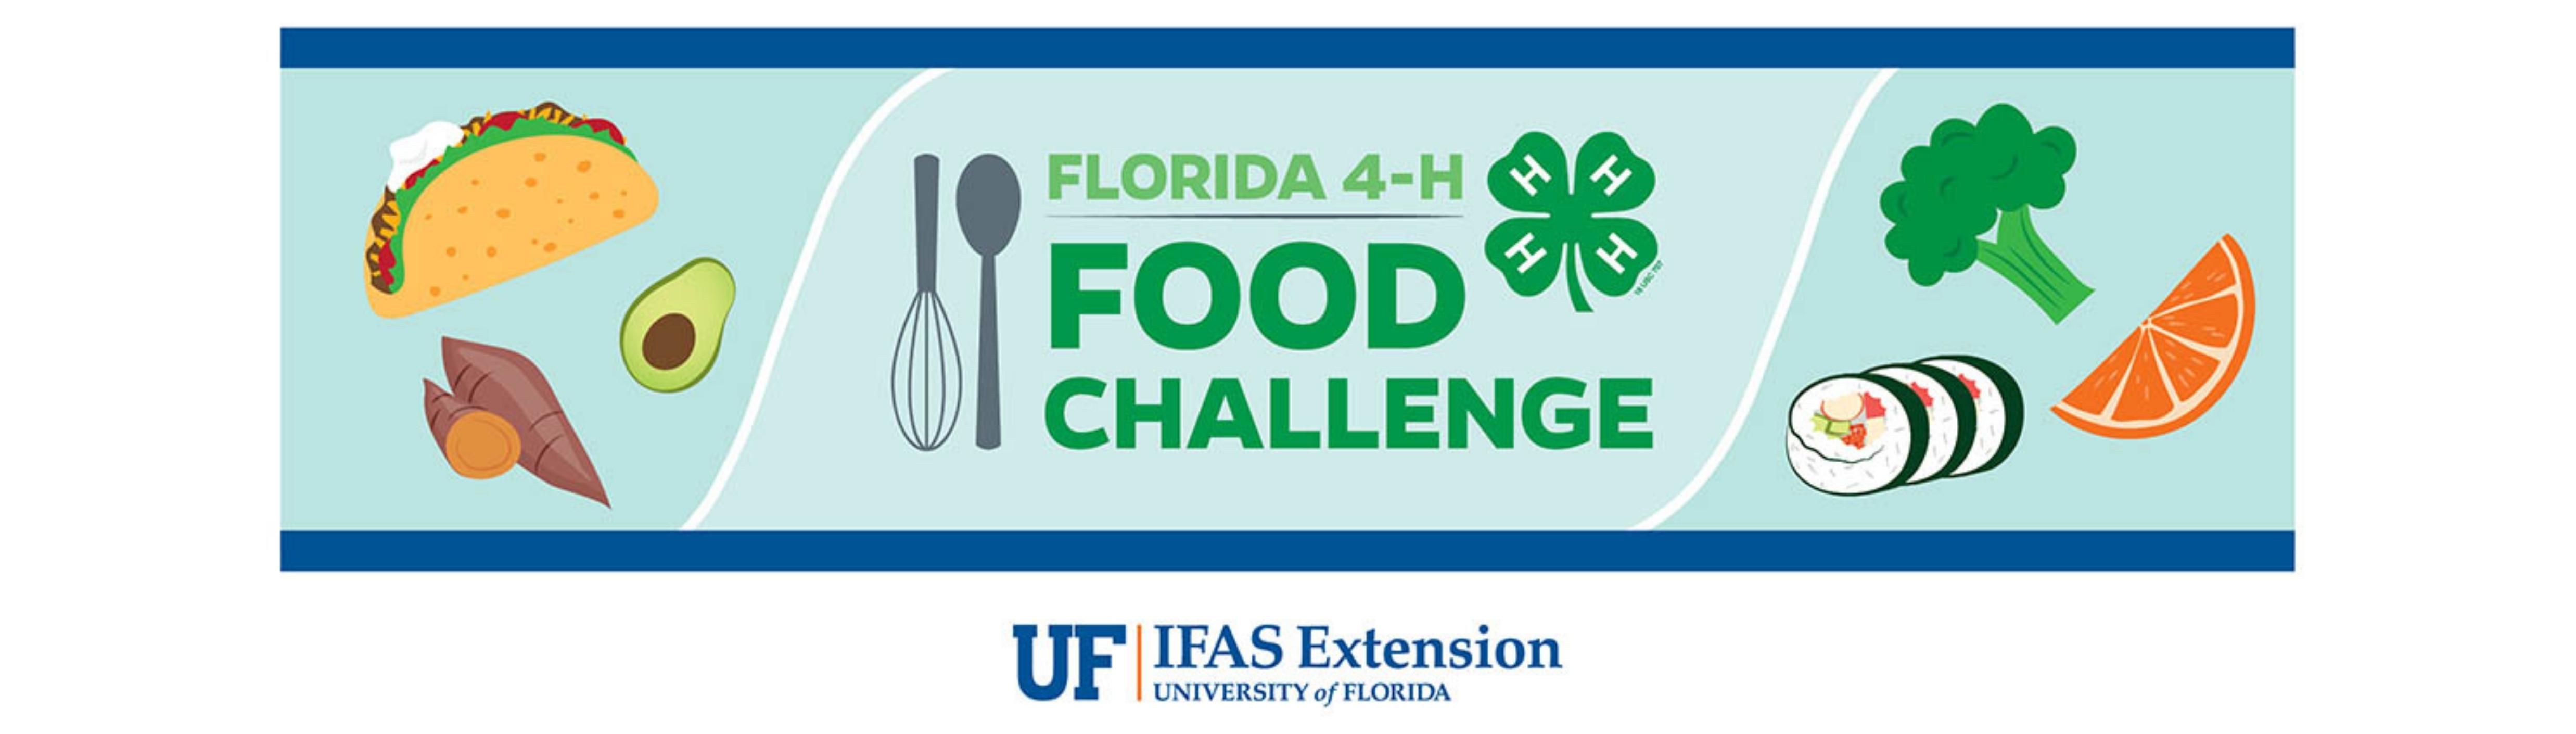 Food challenge graphic